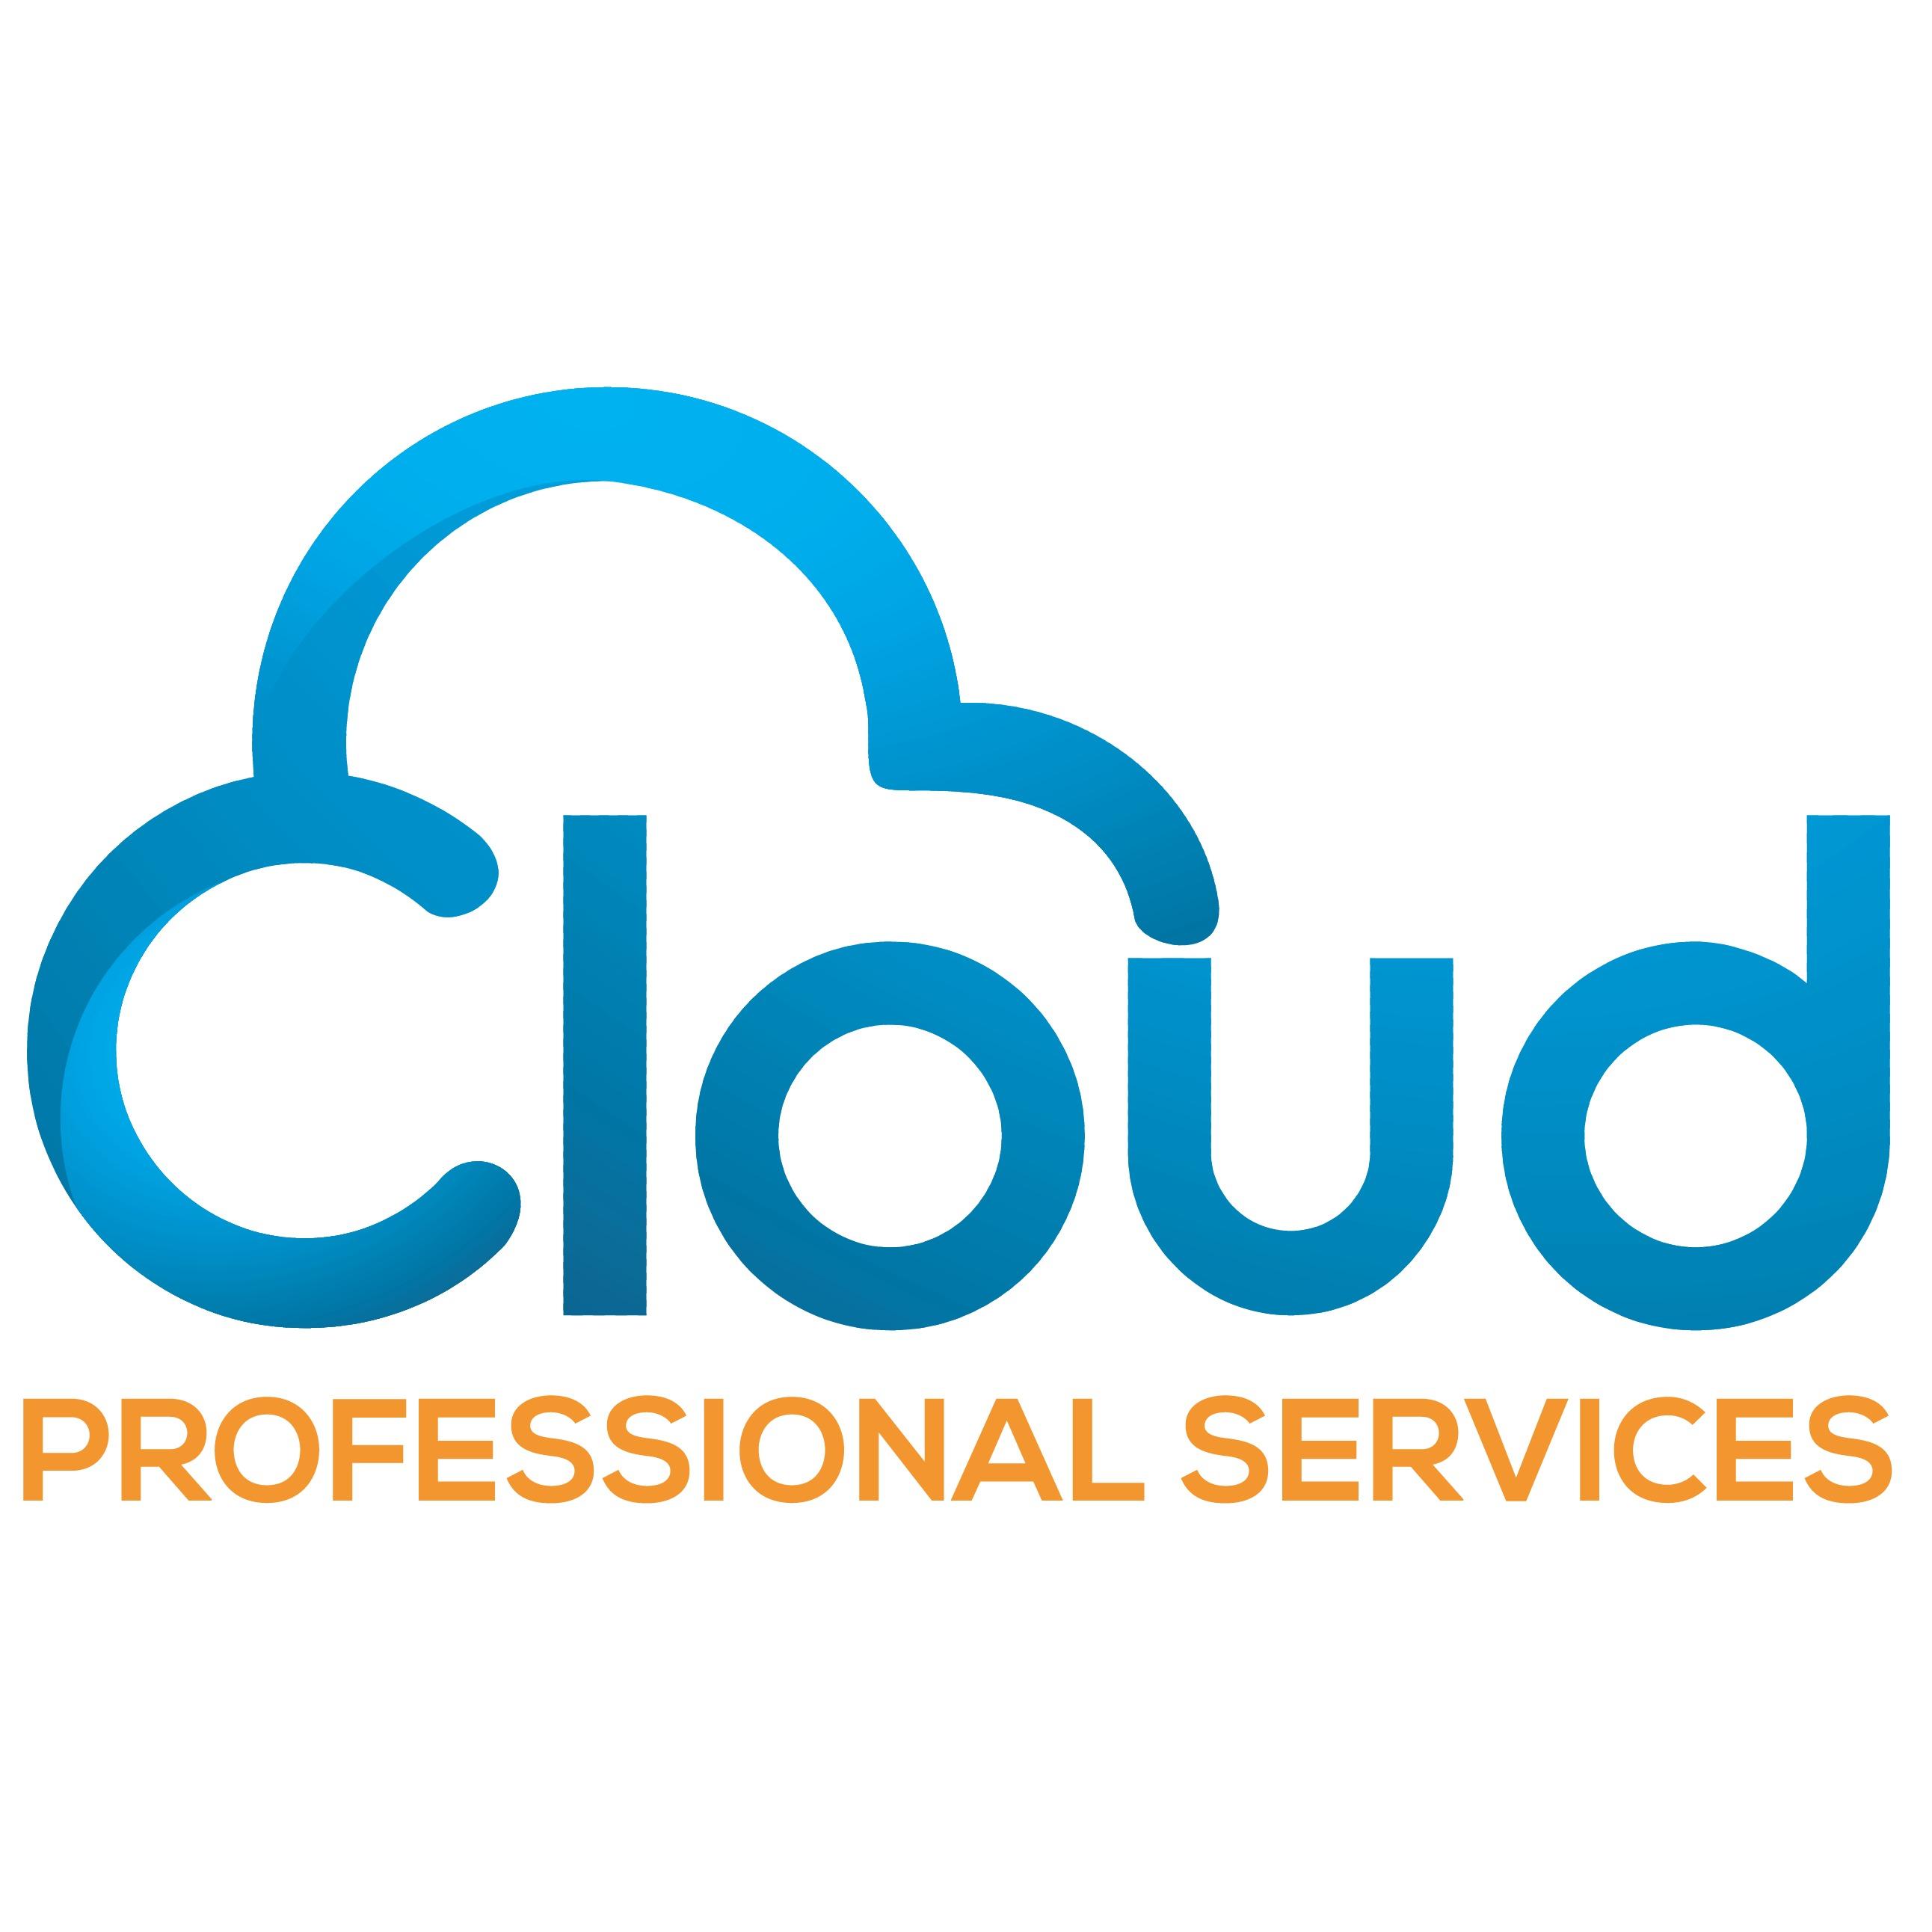 Cloud Professional Services Logo